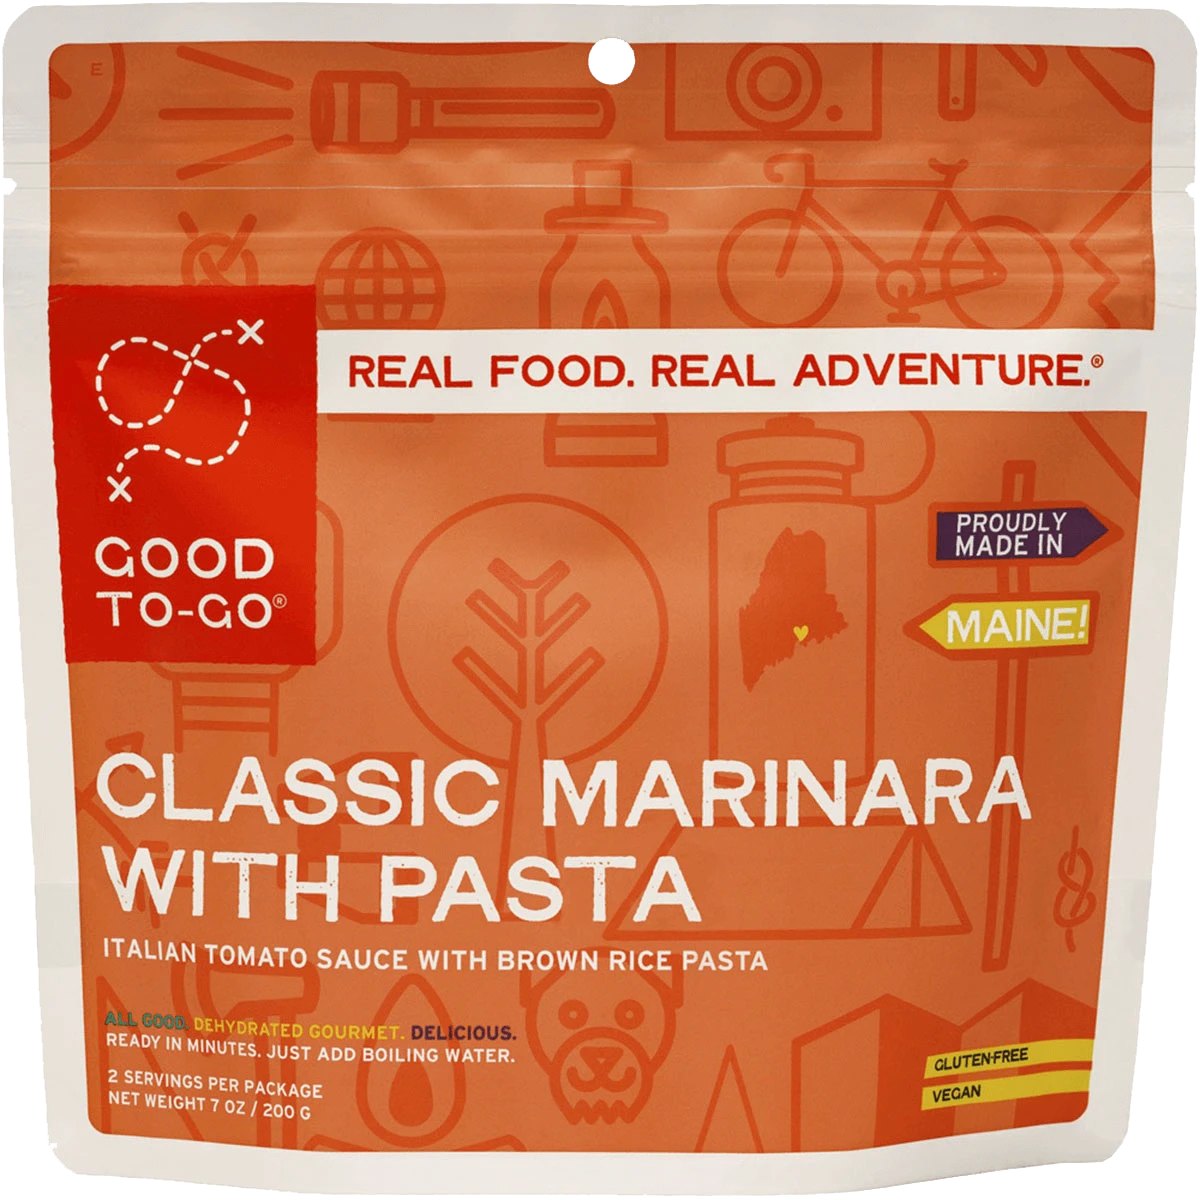 Good To-Go Classic Marinara with Pasta